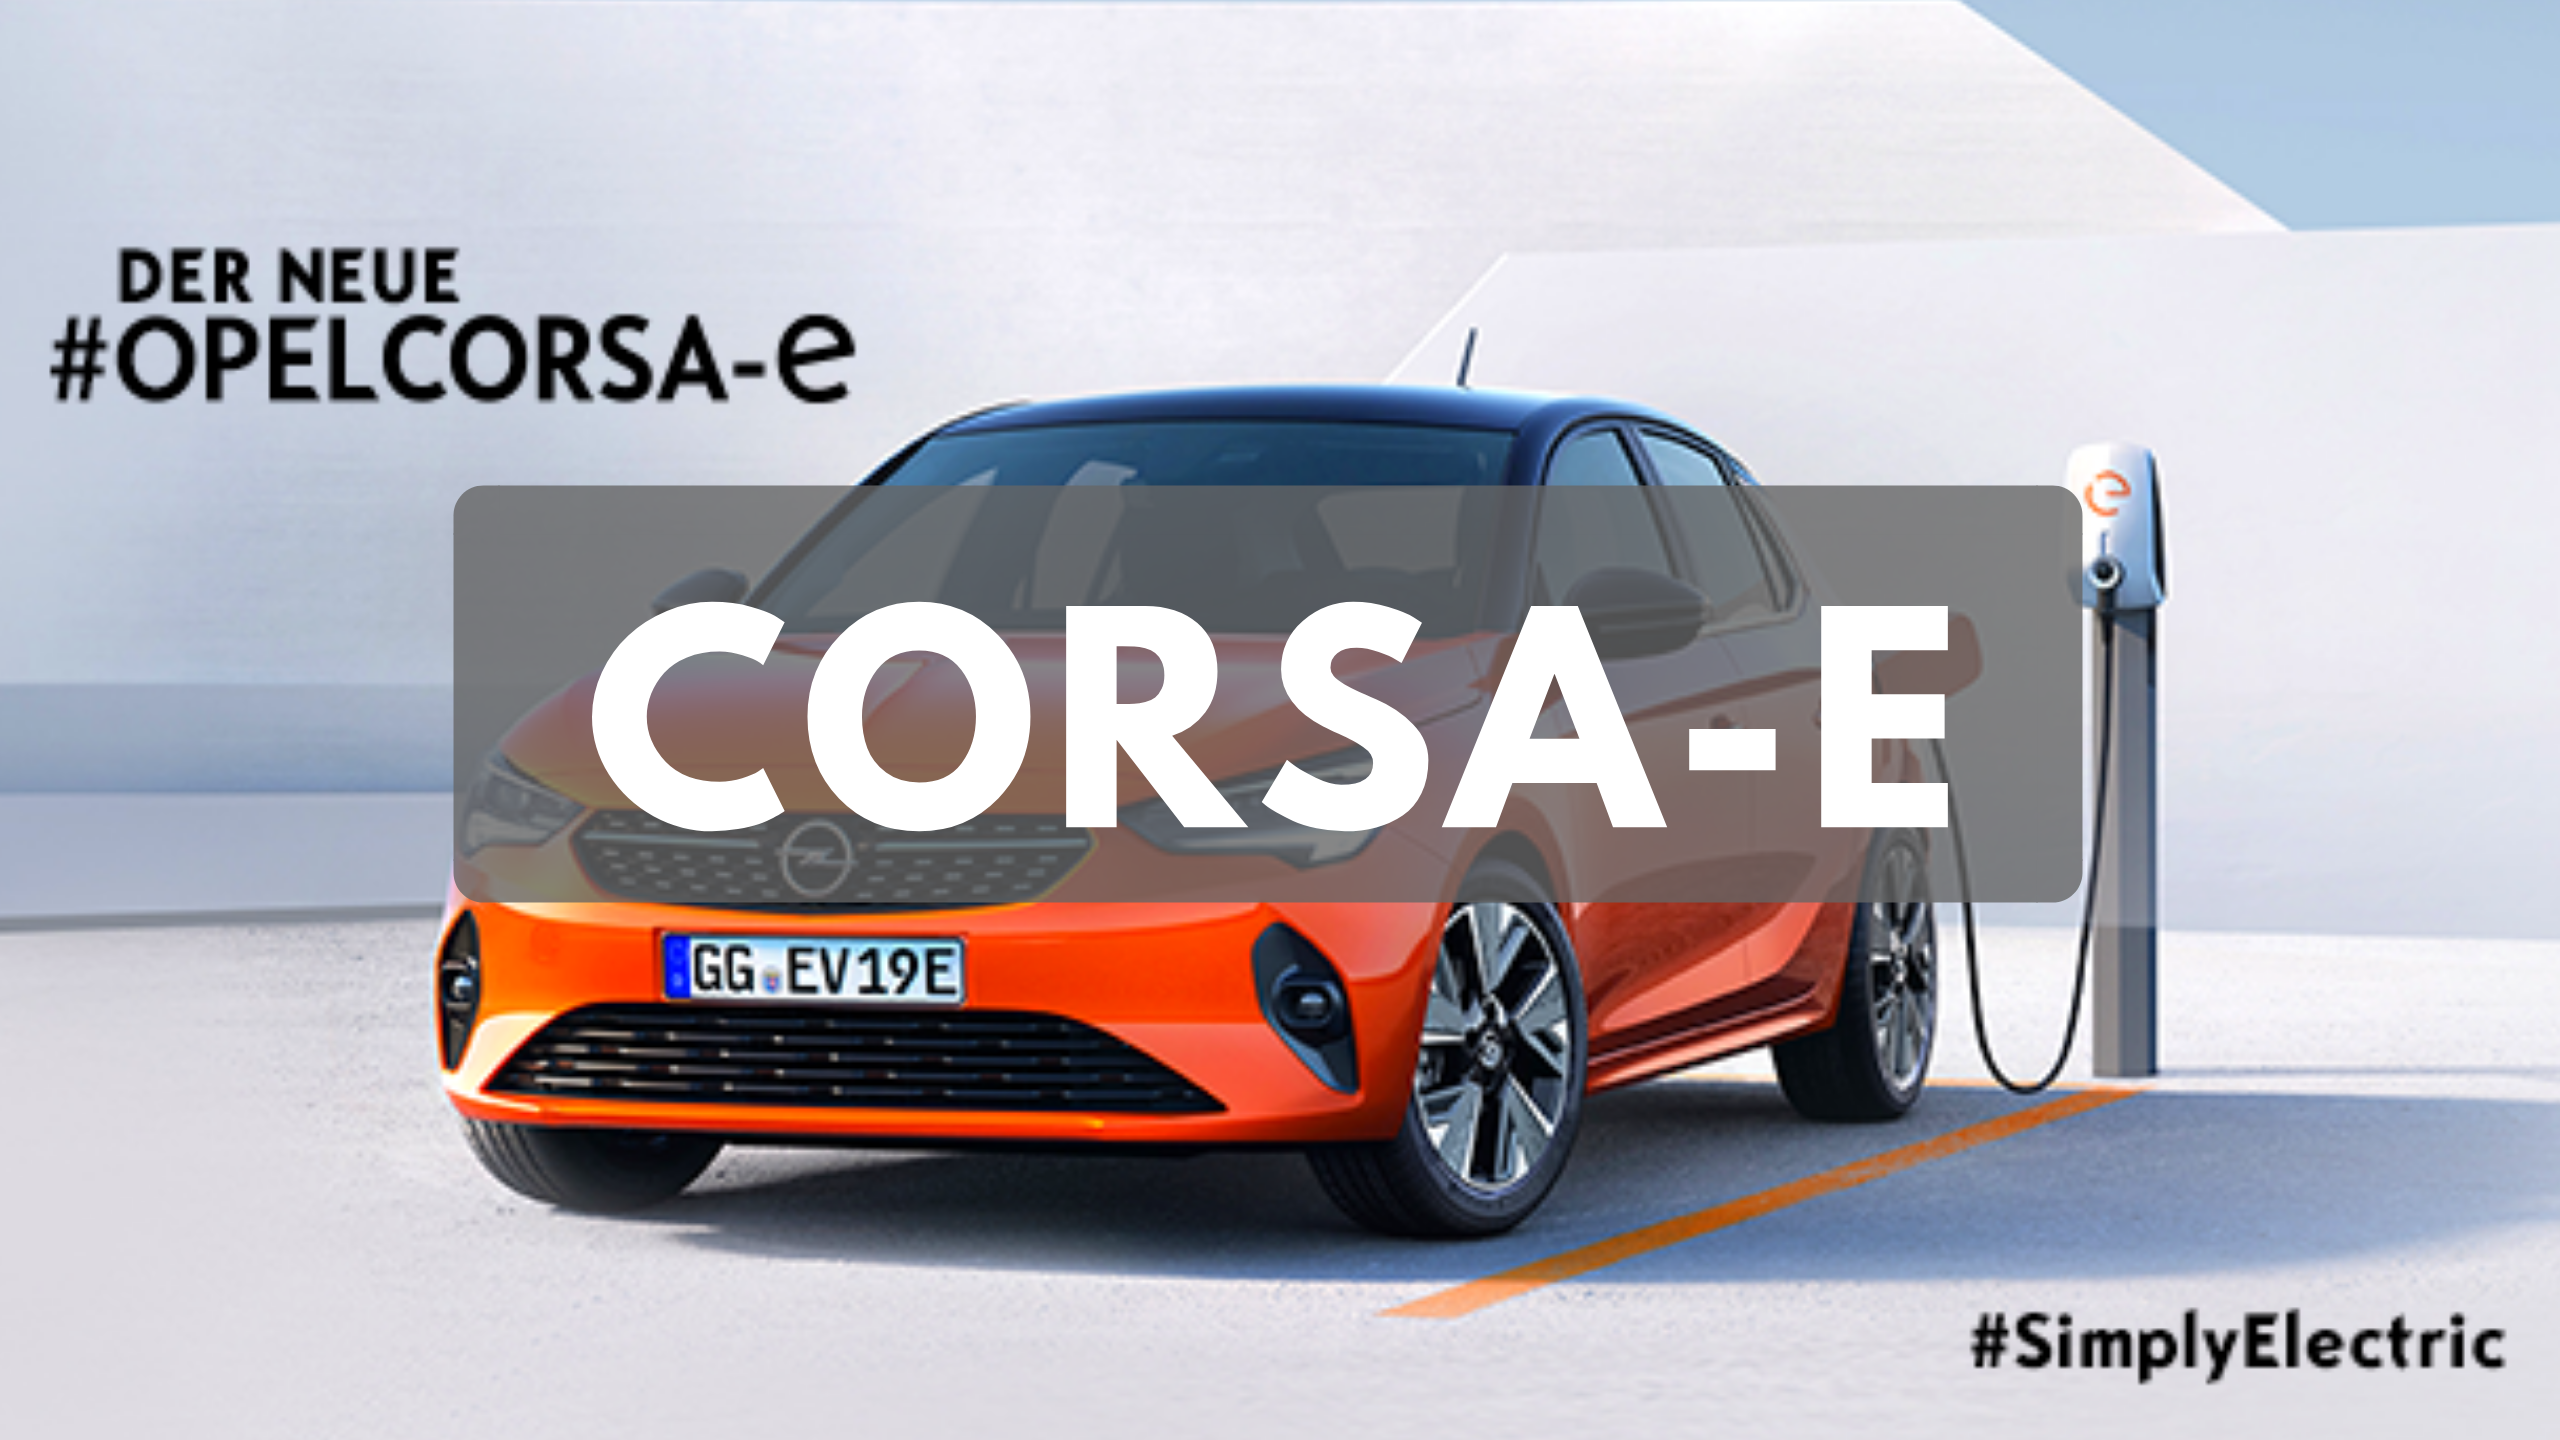 Der neue Opel Corsa e, elektro Corsa, elektrischer crosa bei autohaus thiede